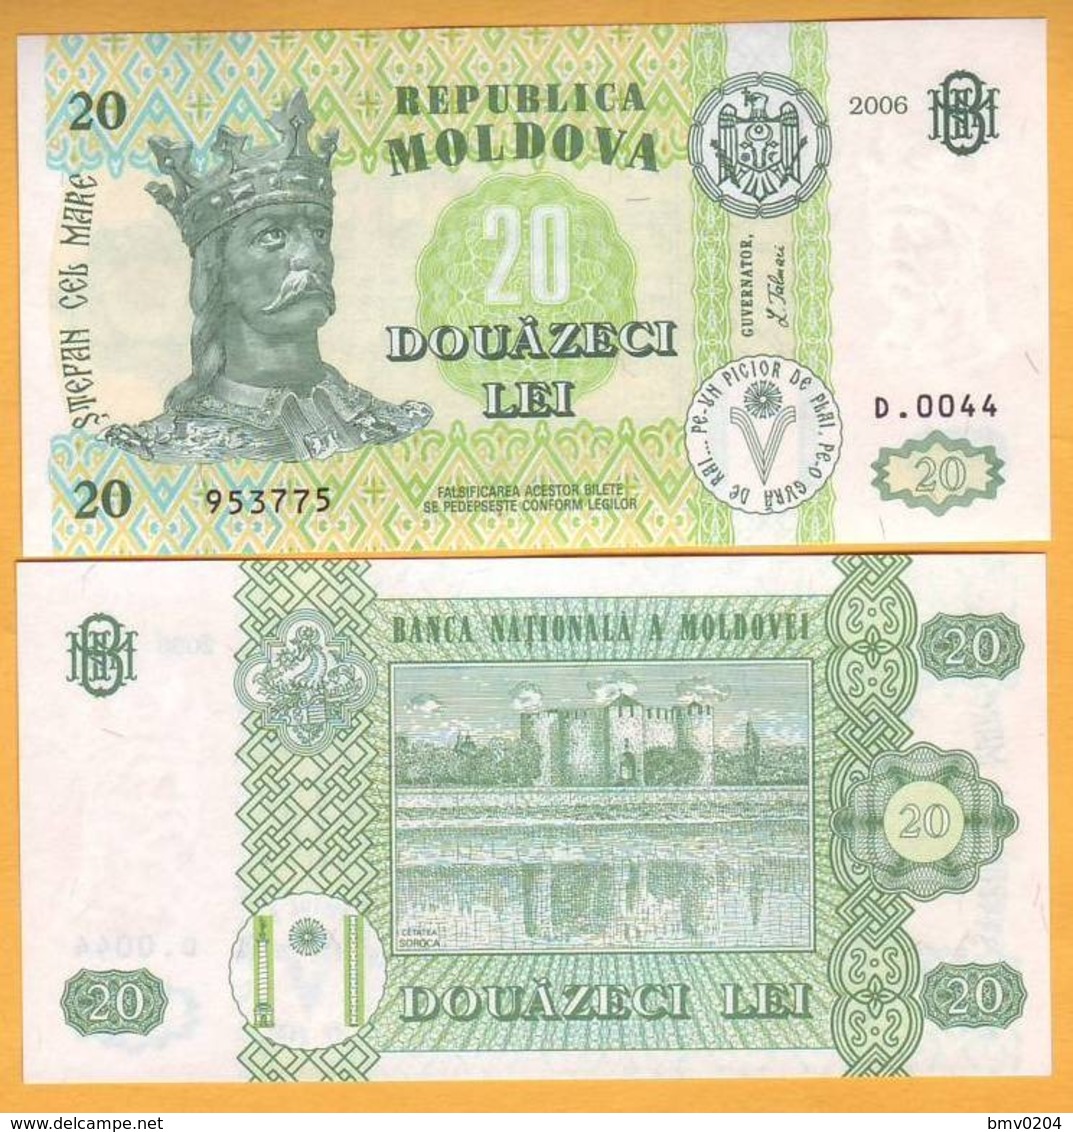 2006 Moldova ; Moldavie ; Moldau  "20 LEI  2006"  UNC 953775 - Moldavia